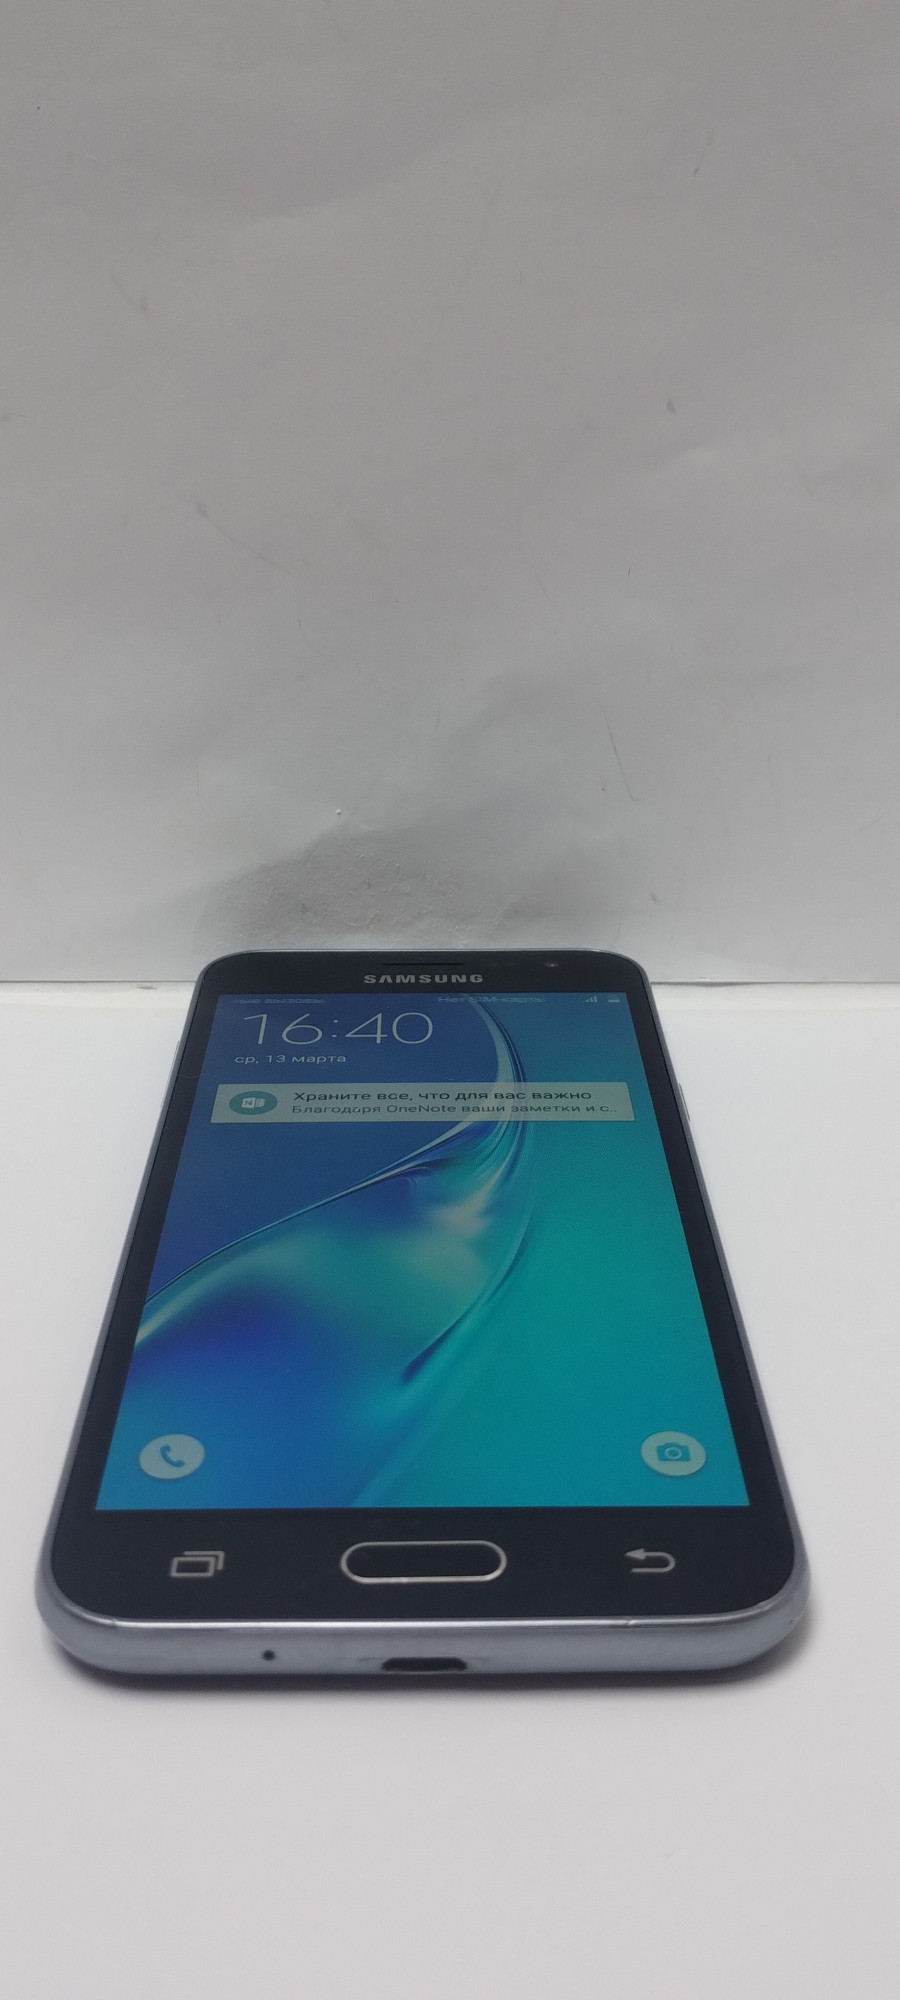 Samsung Galaxy J3 2016 Black (SM-J320H) 1/8Gb 1